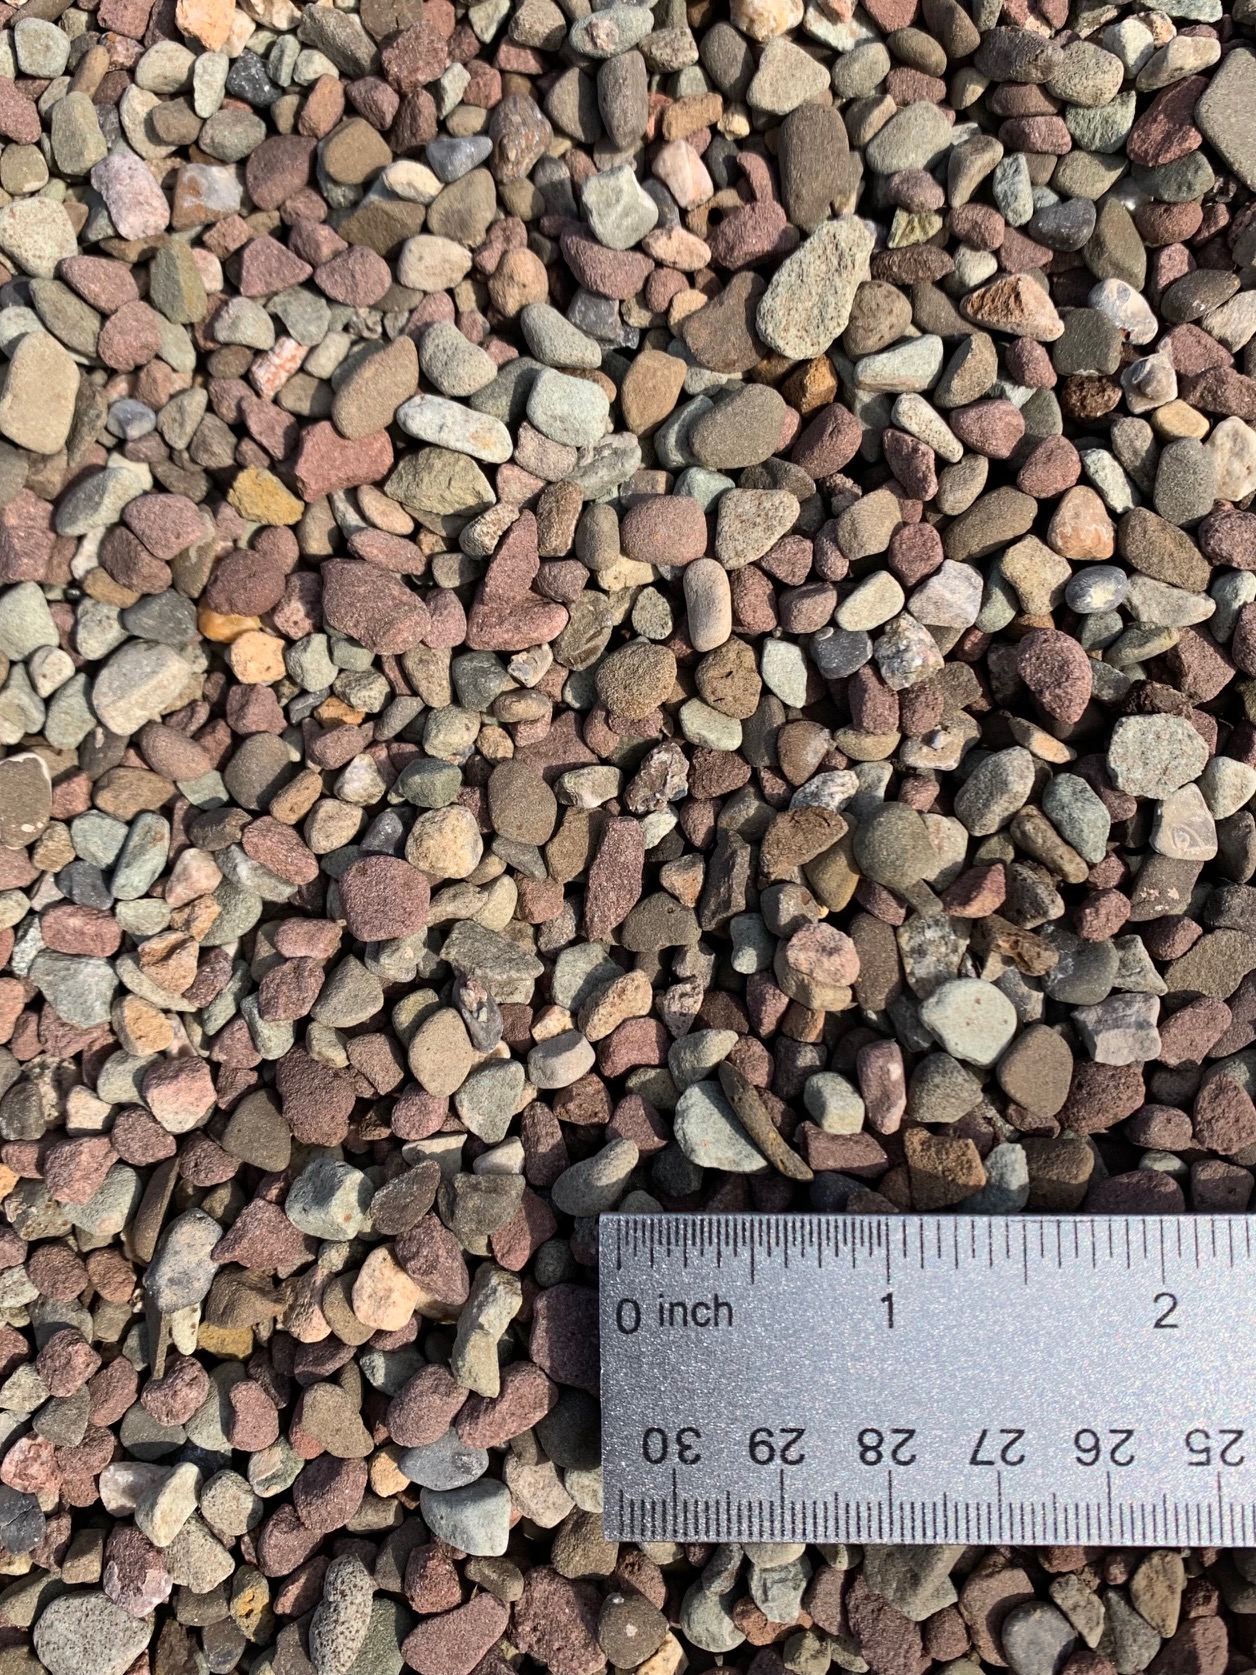 3/8 Stone (Pea Stone Size)